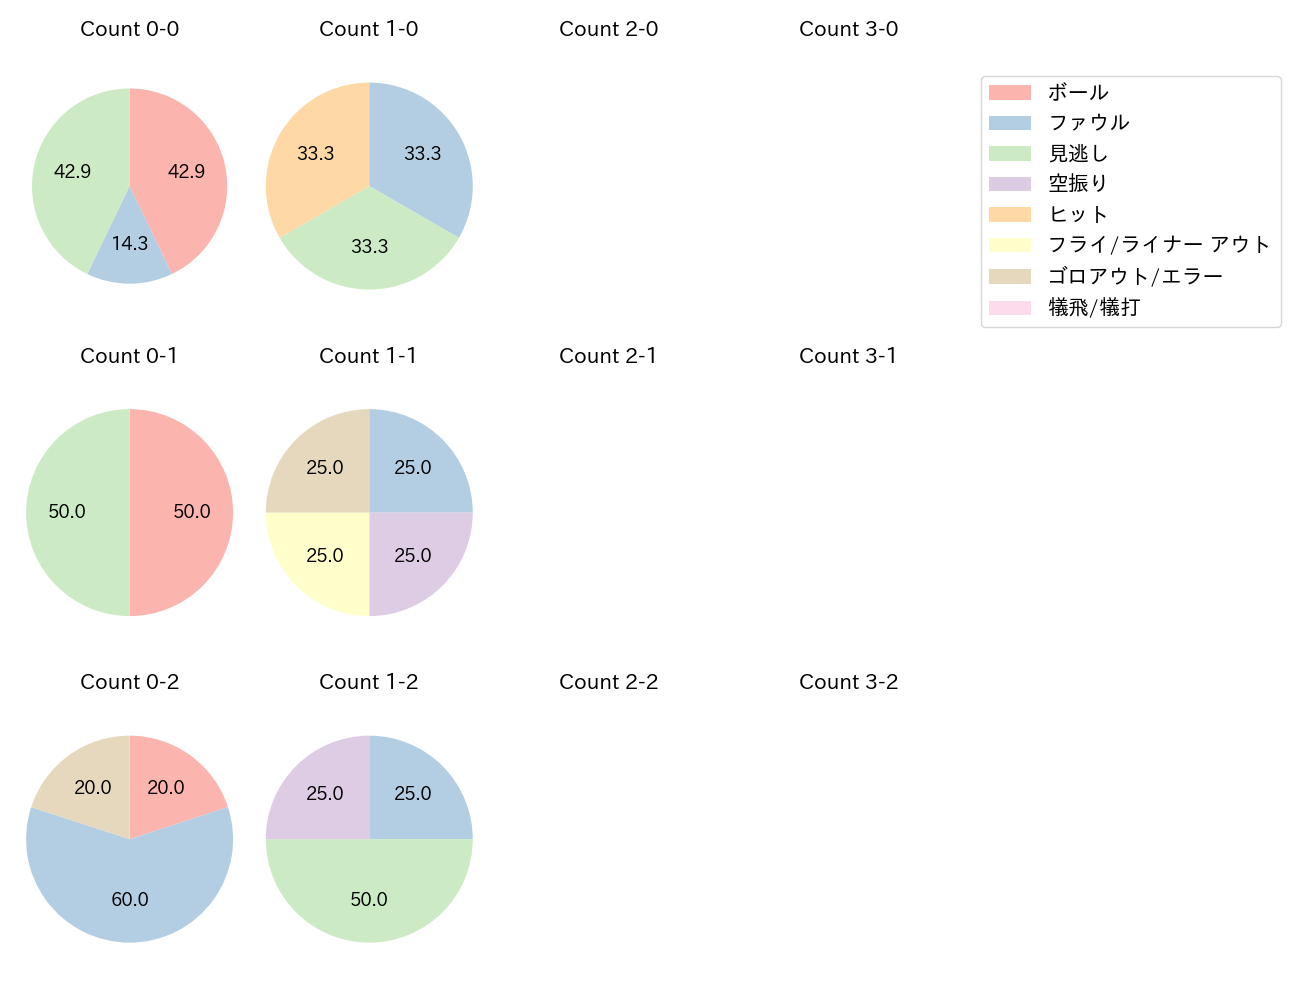 高橋 奎二の球数分布(2022年8月)